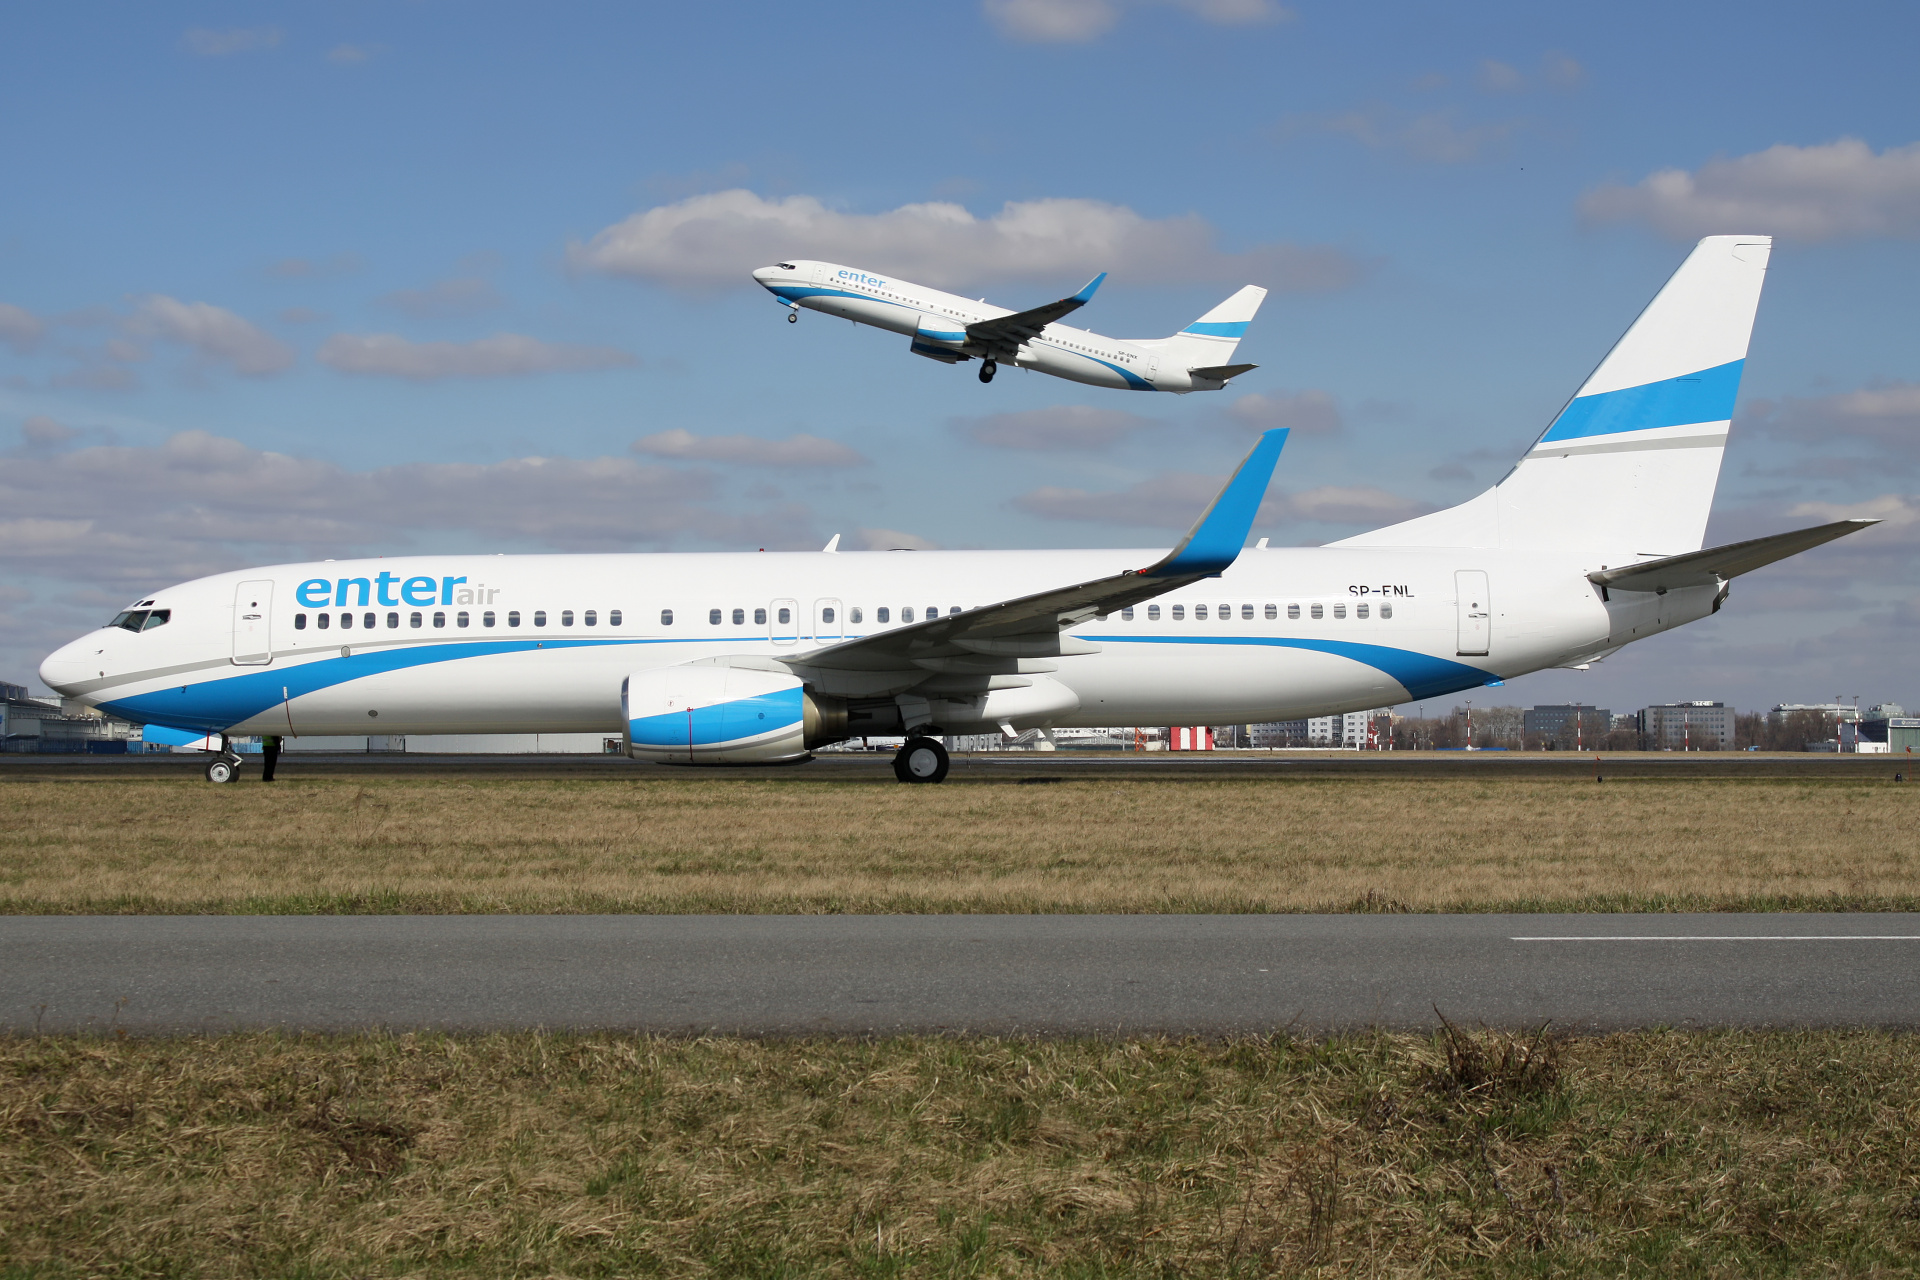 SP-ENL (Aircraft » EPWA Spotting » Boeing 737-800 » Enter Air)